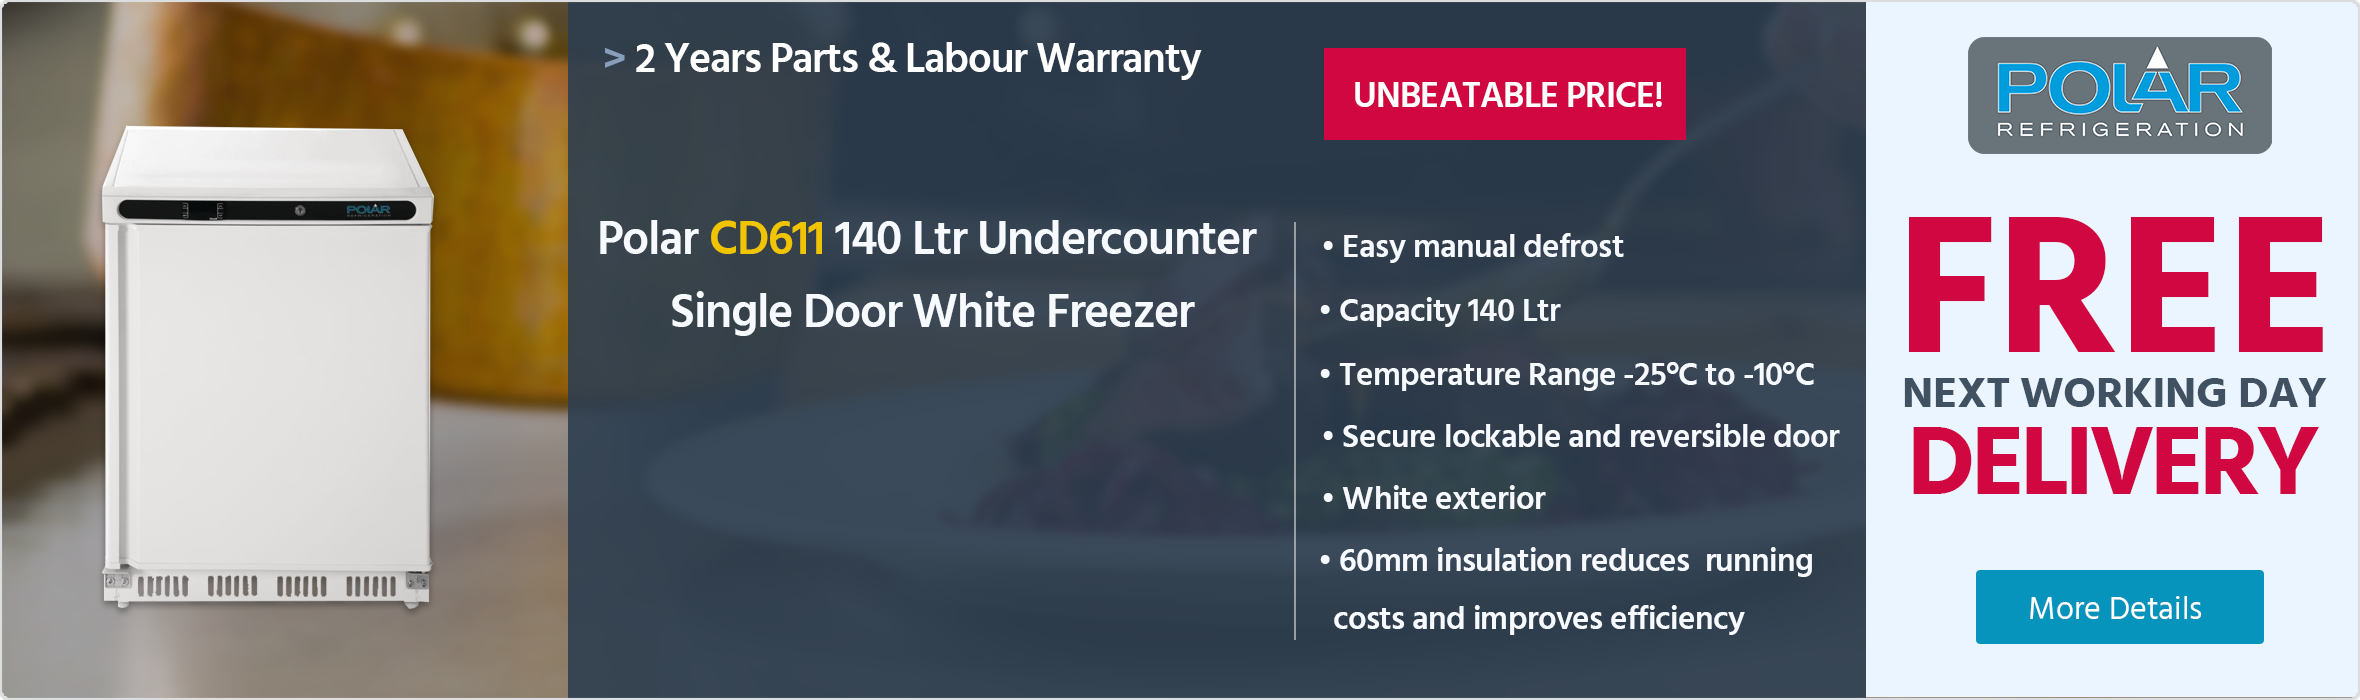 Polar C-Series CD611 140 Ltr Undercounter Single Door White Freezer